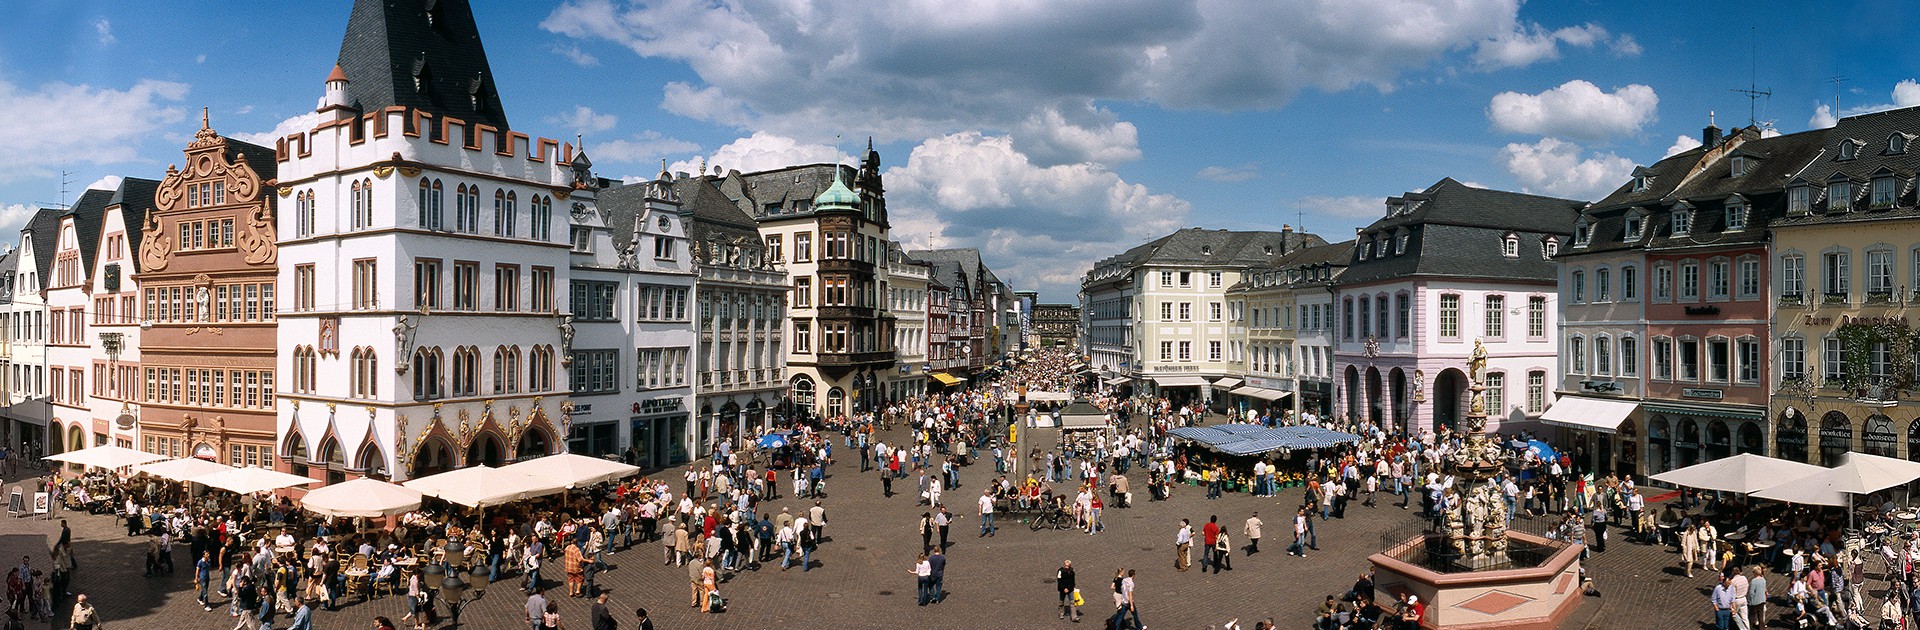 Hauptmarkt Trier